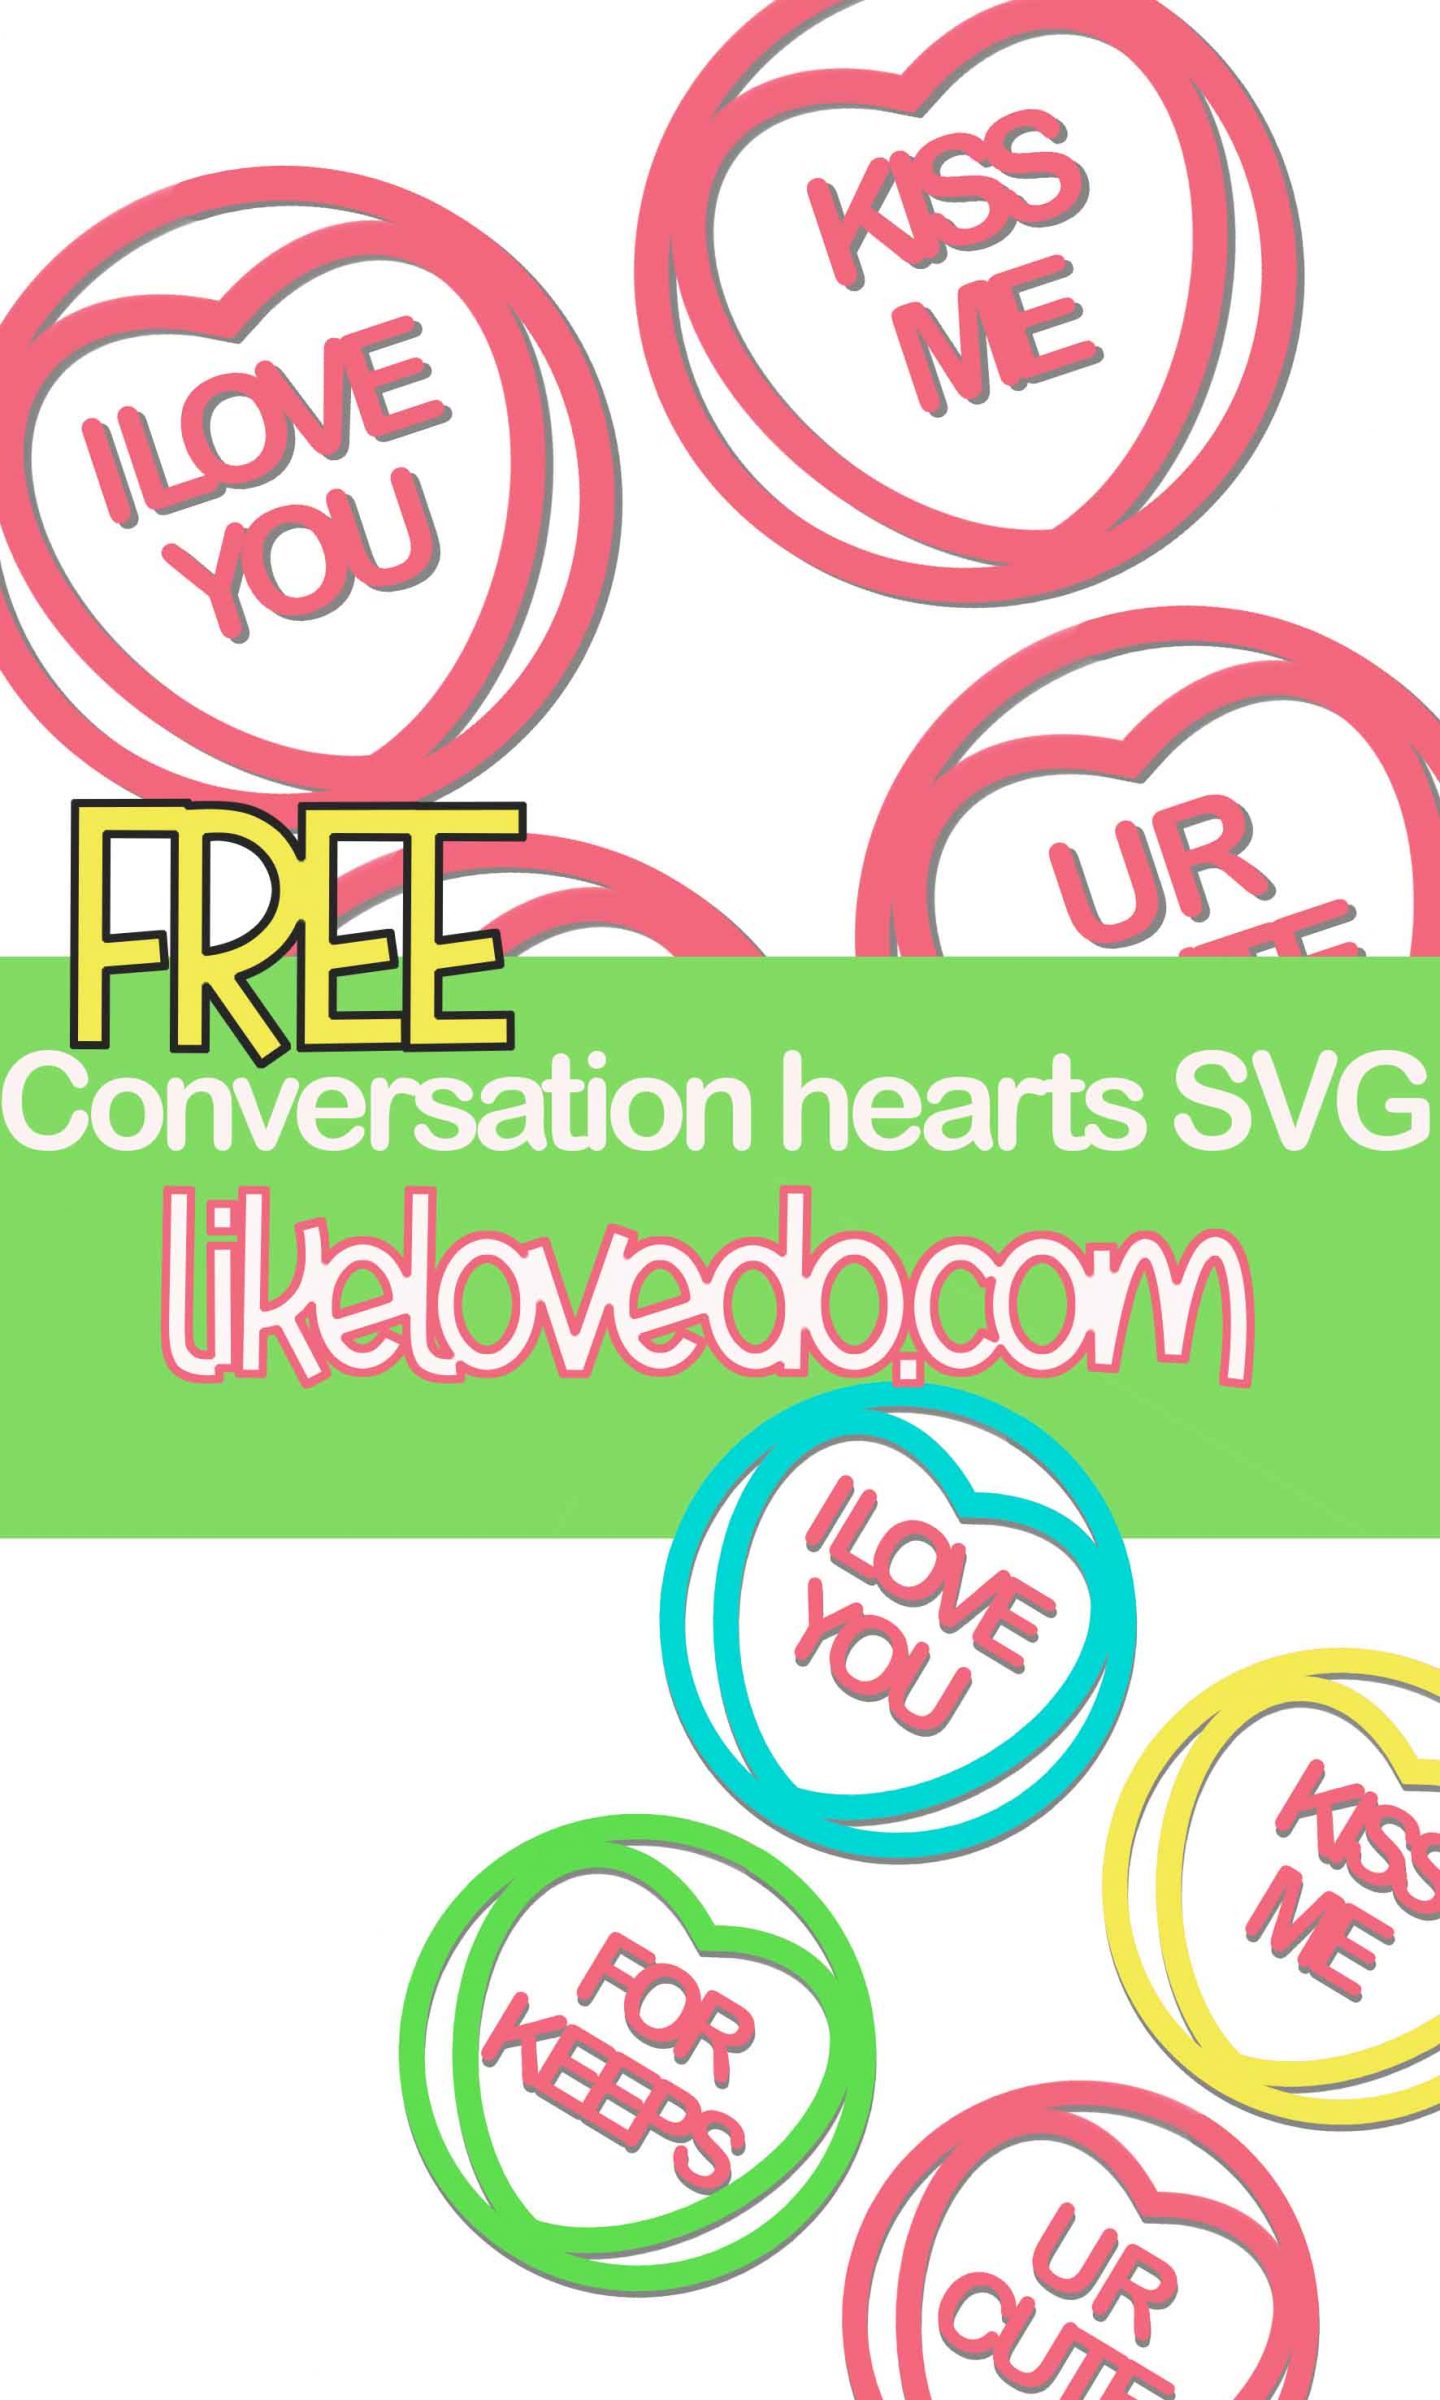 Free love Hearts conversation hearts SVG free